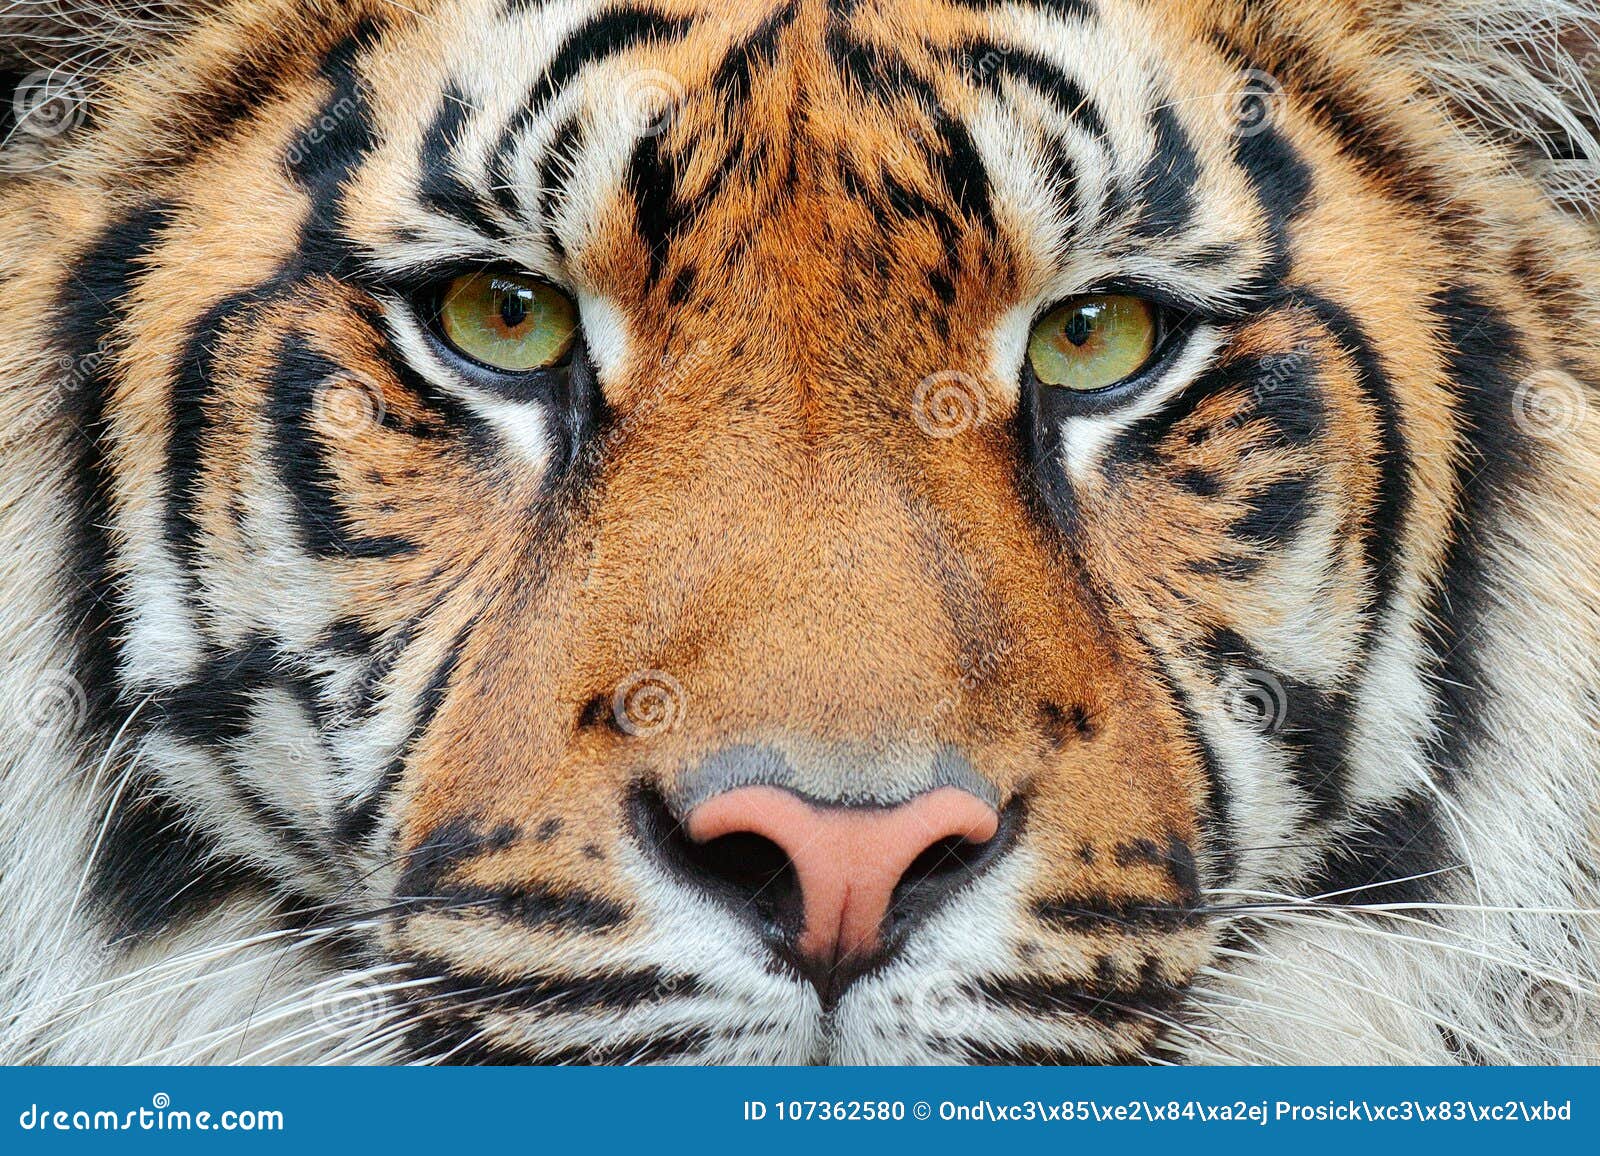 close-up detail portrait of tiger. sumatran tiger, panthera tigris sumatrae, rare tiger subspecies that inhabits the indonesian is